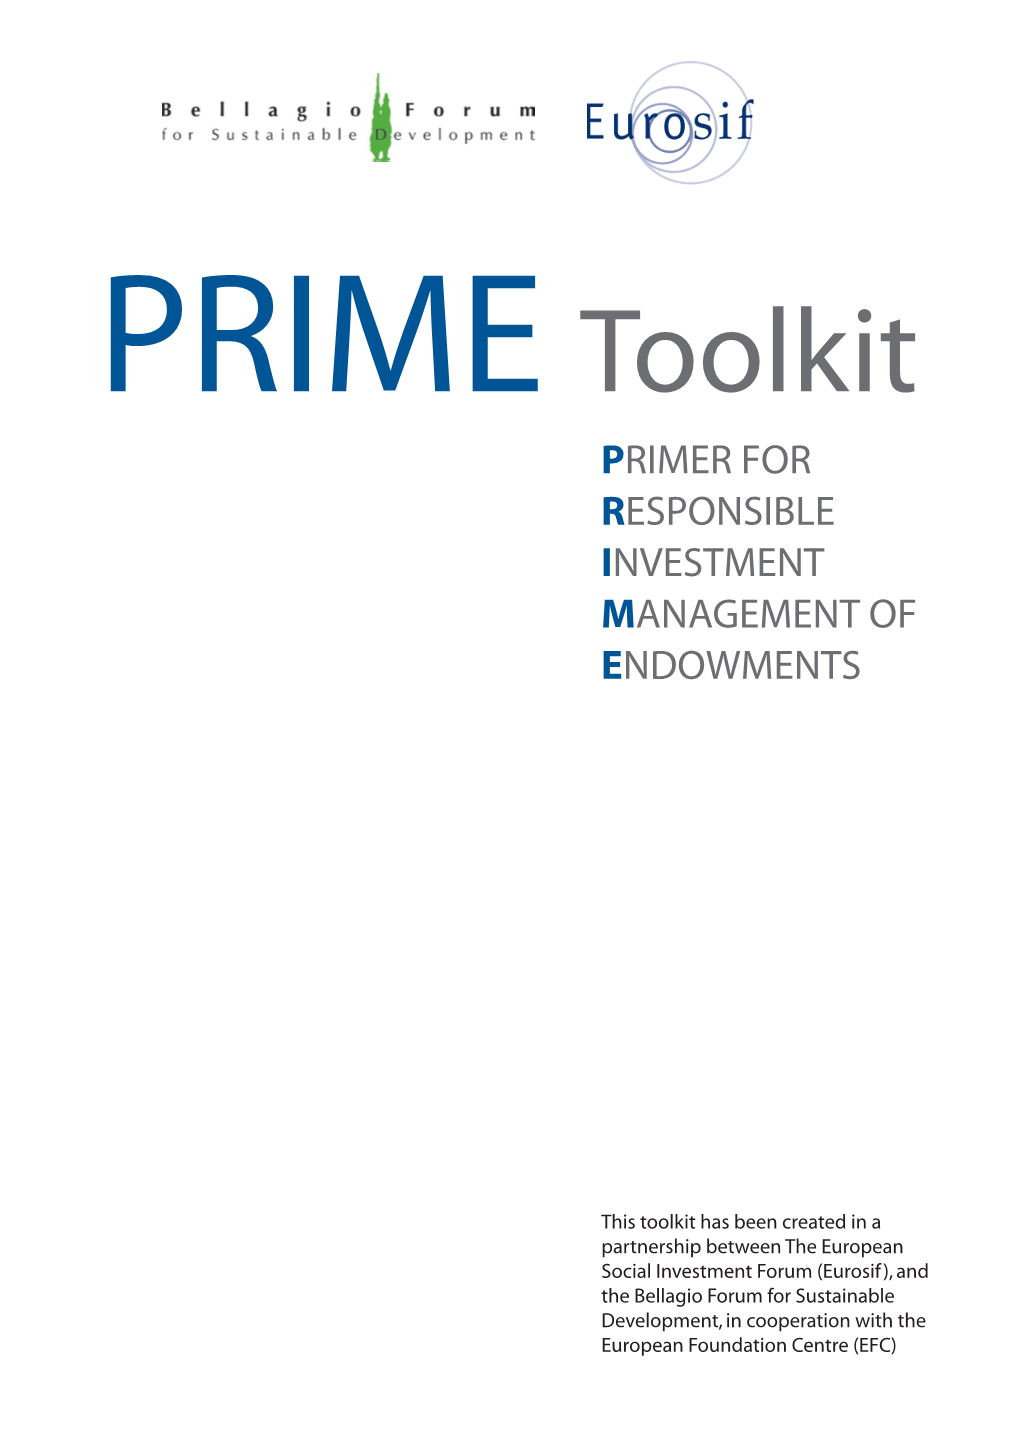 Primer for Responsible Investment Management of Endowments